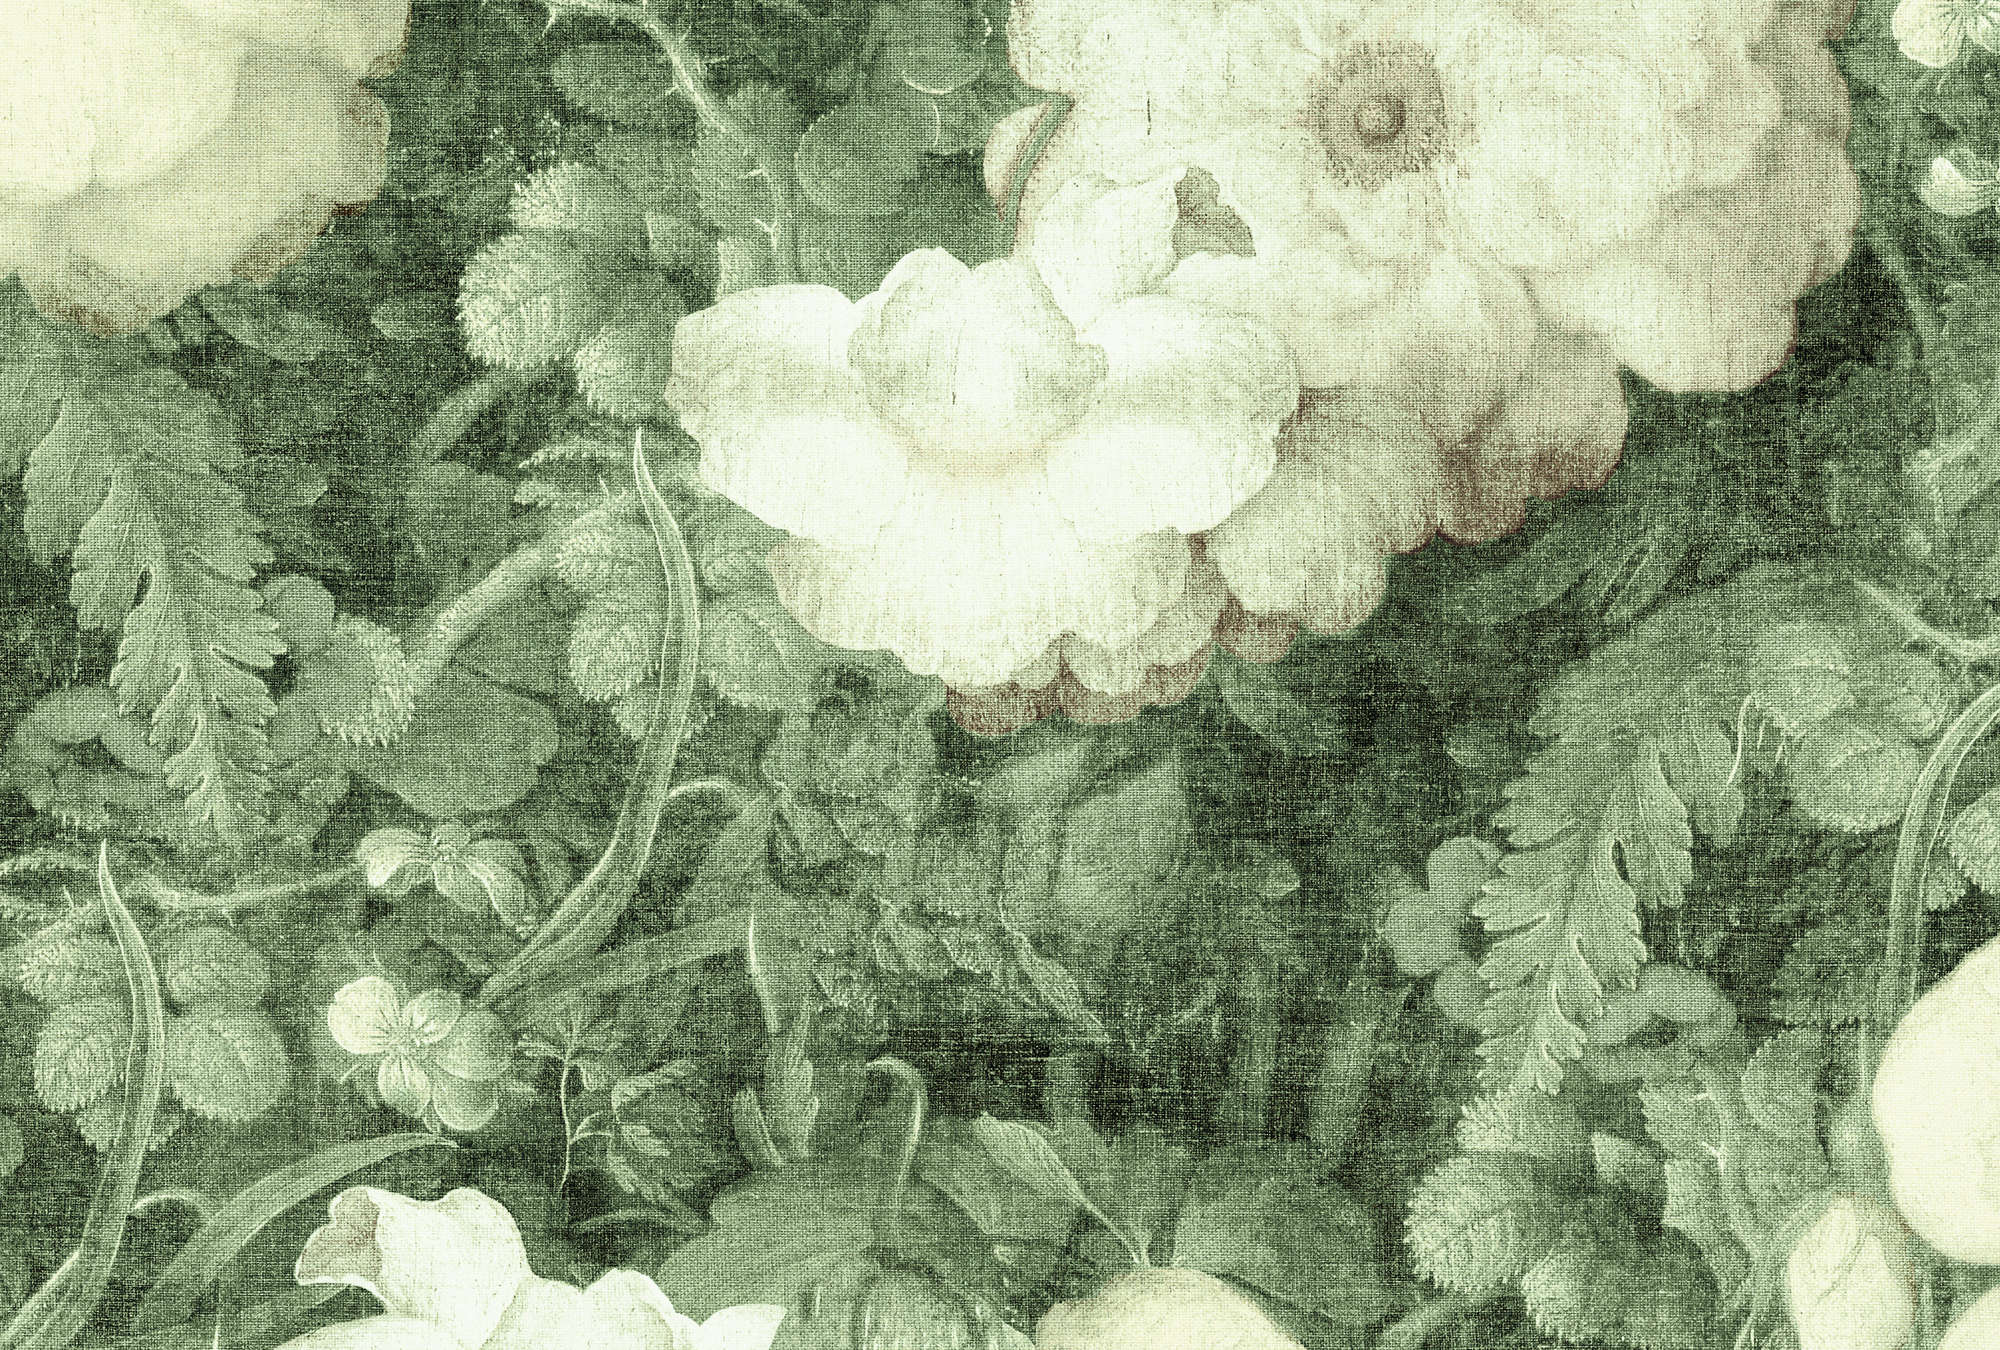             Fleurs Papier peint Peinture & aspect naturel du lin - Vert, Blanc
        